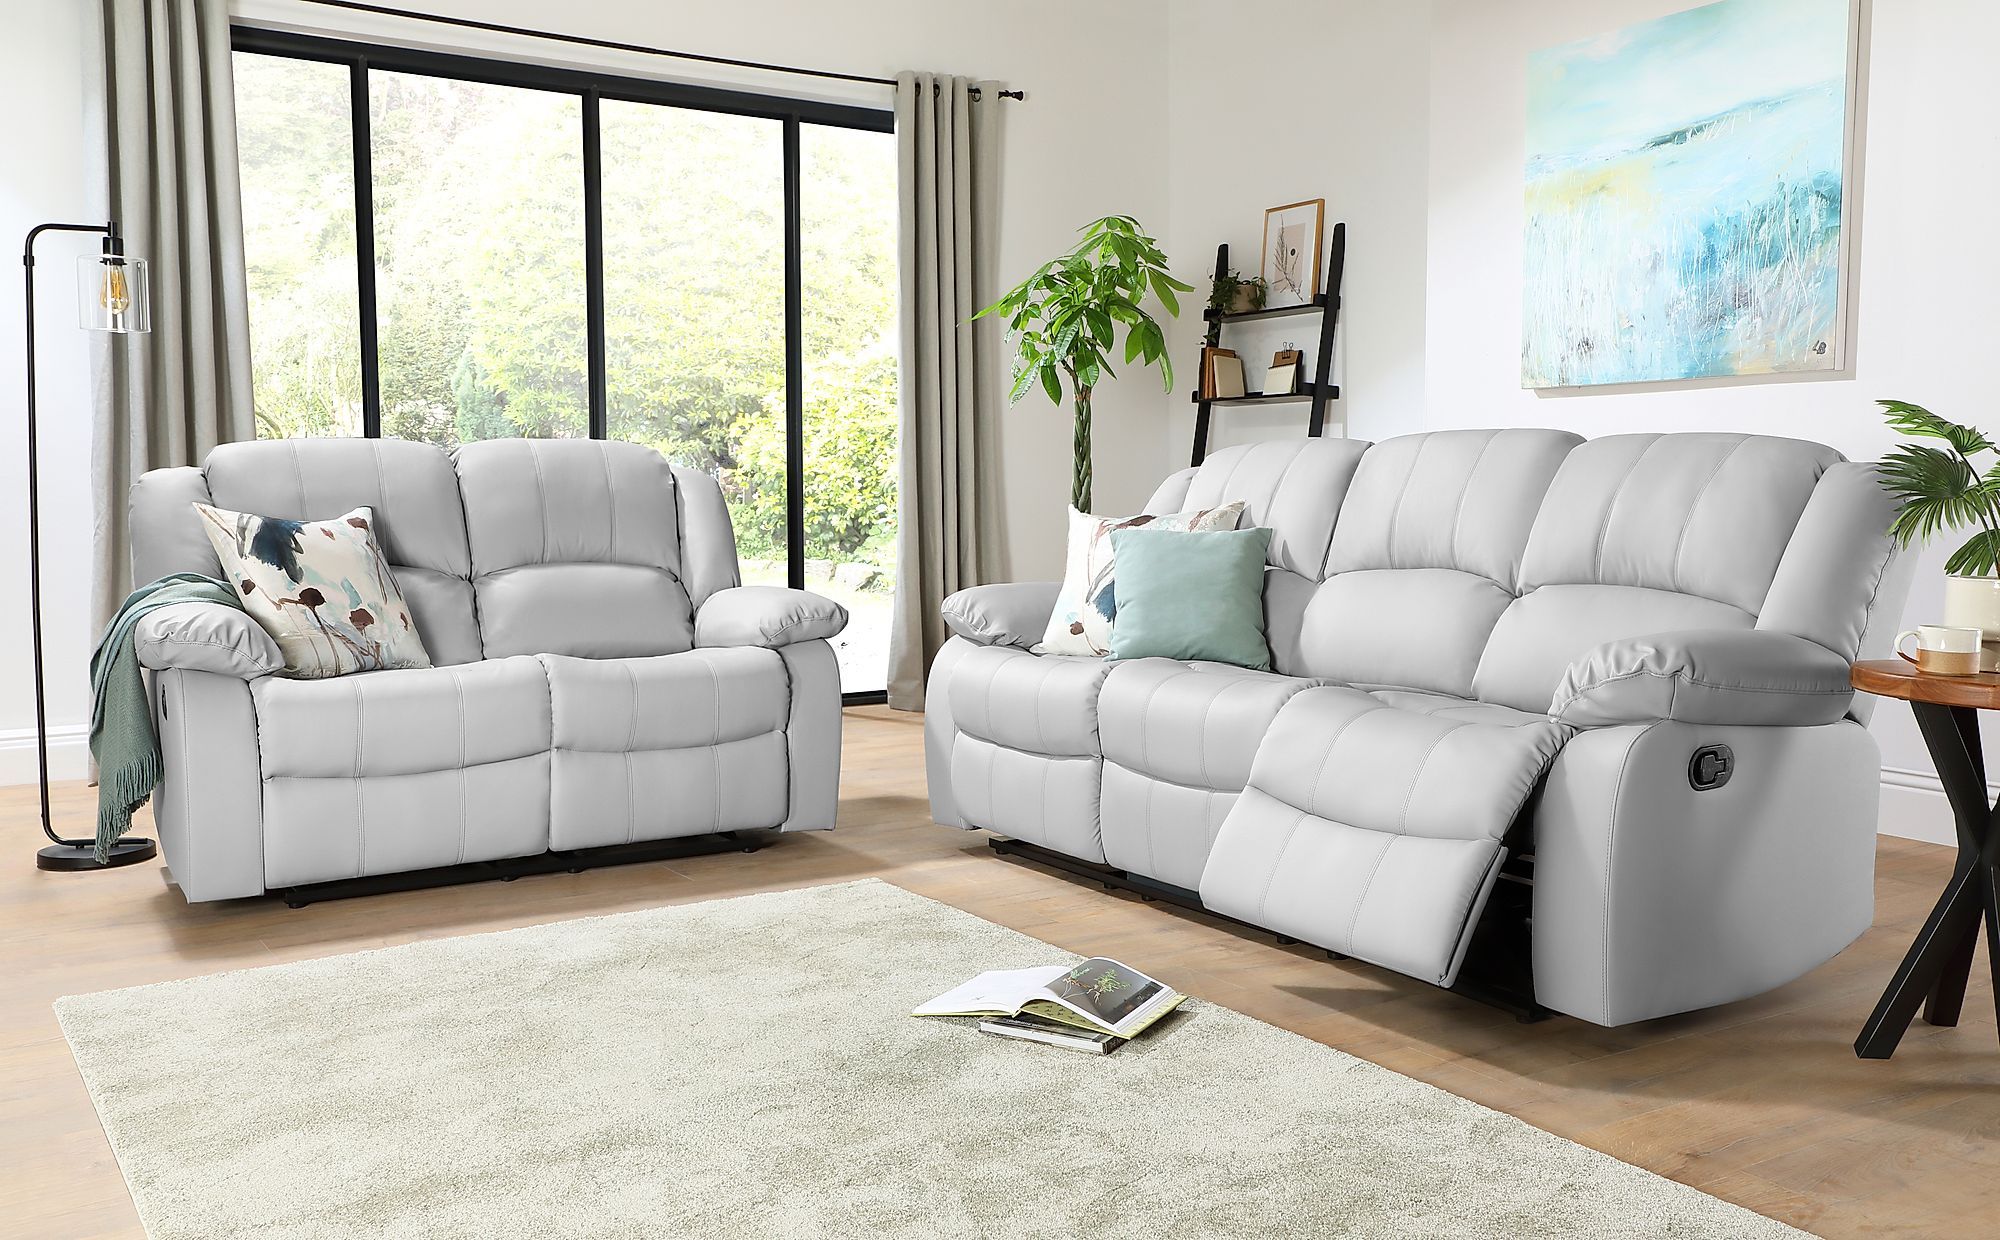 Dakota Light Grey Leather 3+2 Seater Recliner Sofa Set | Furniture Choice With Regard To Sofas In Light Grey (View 8 of 20)